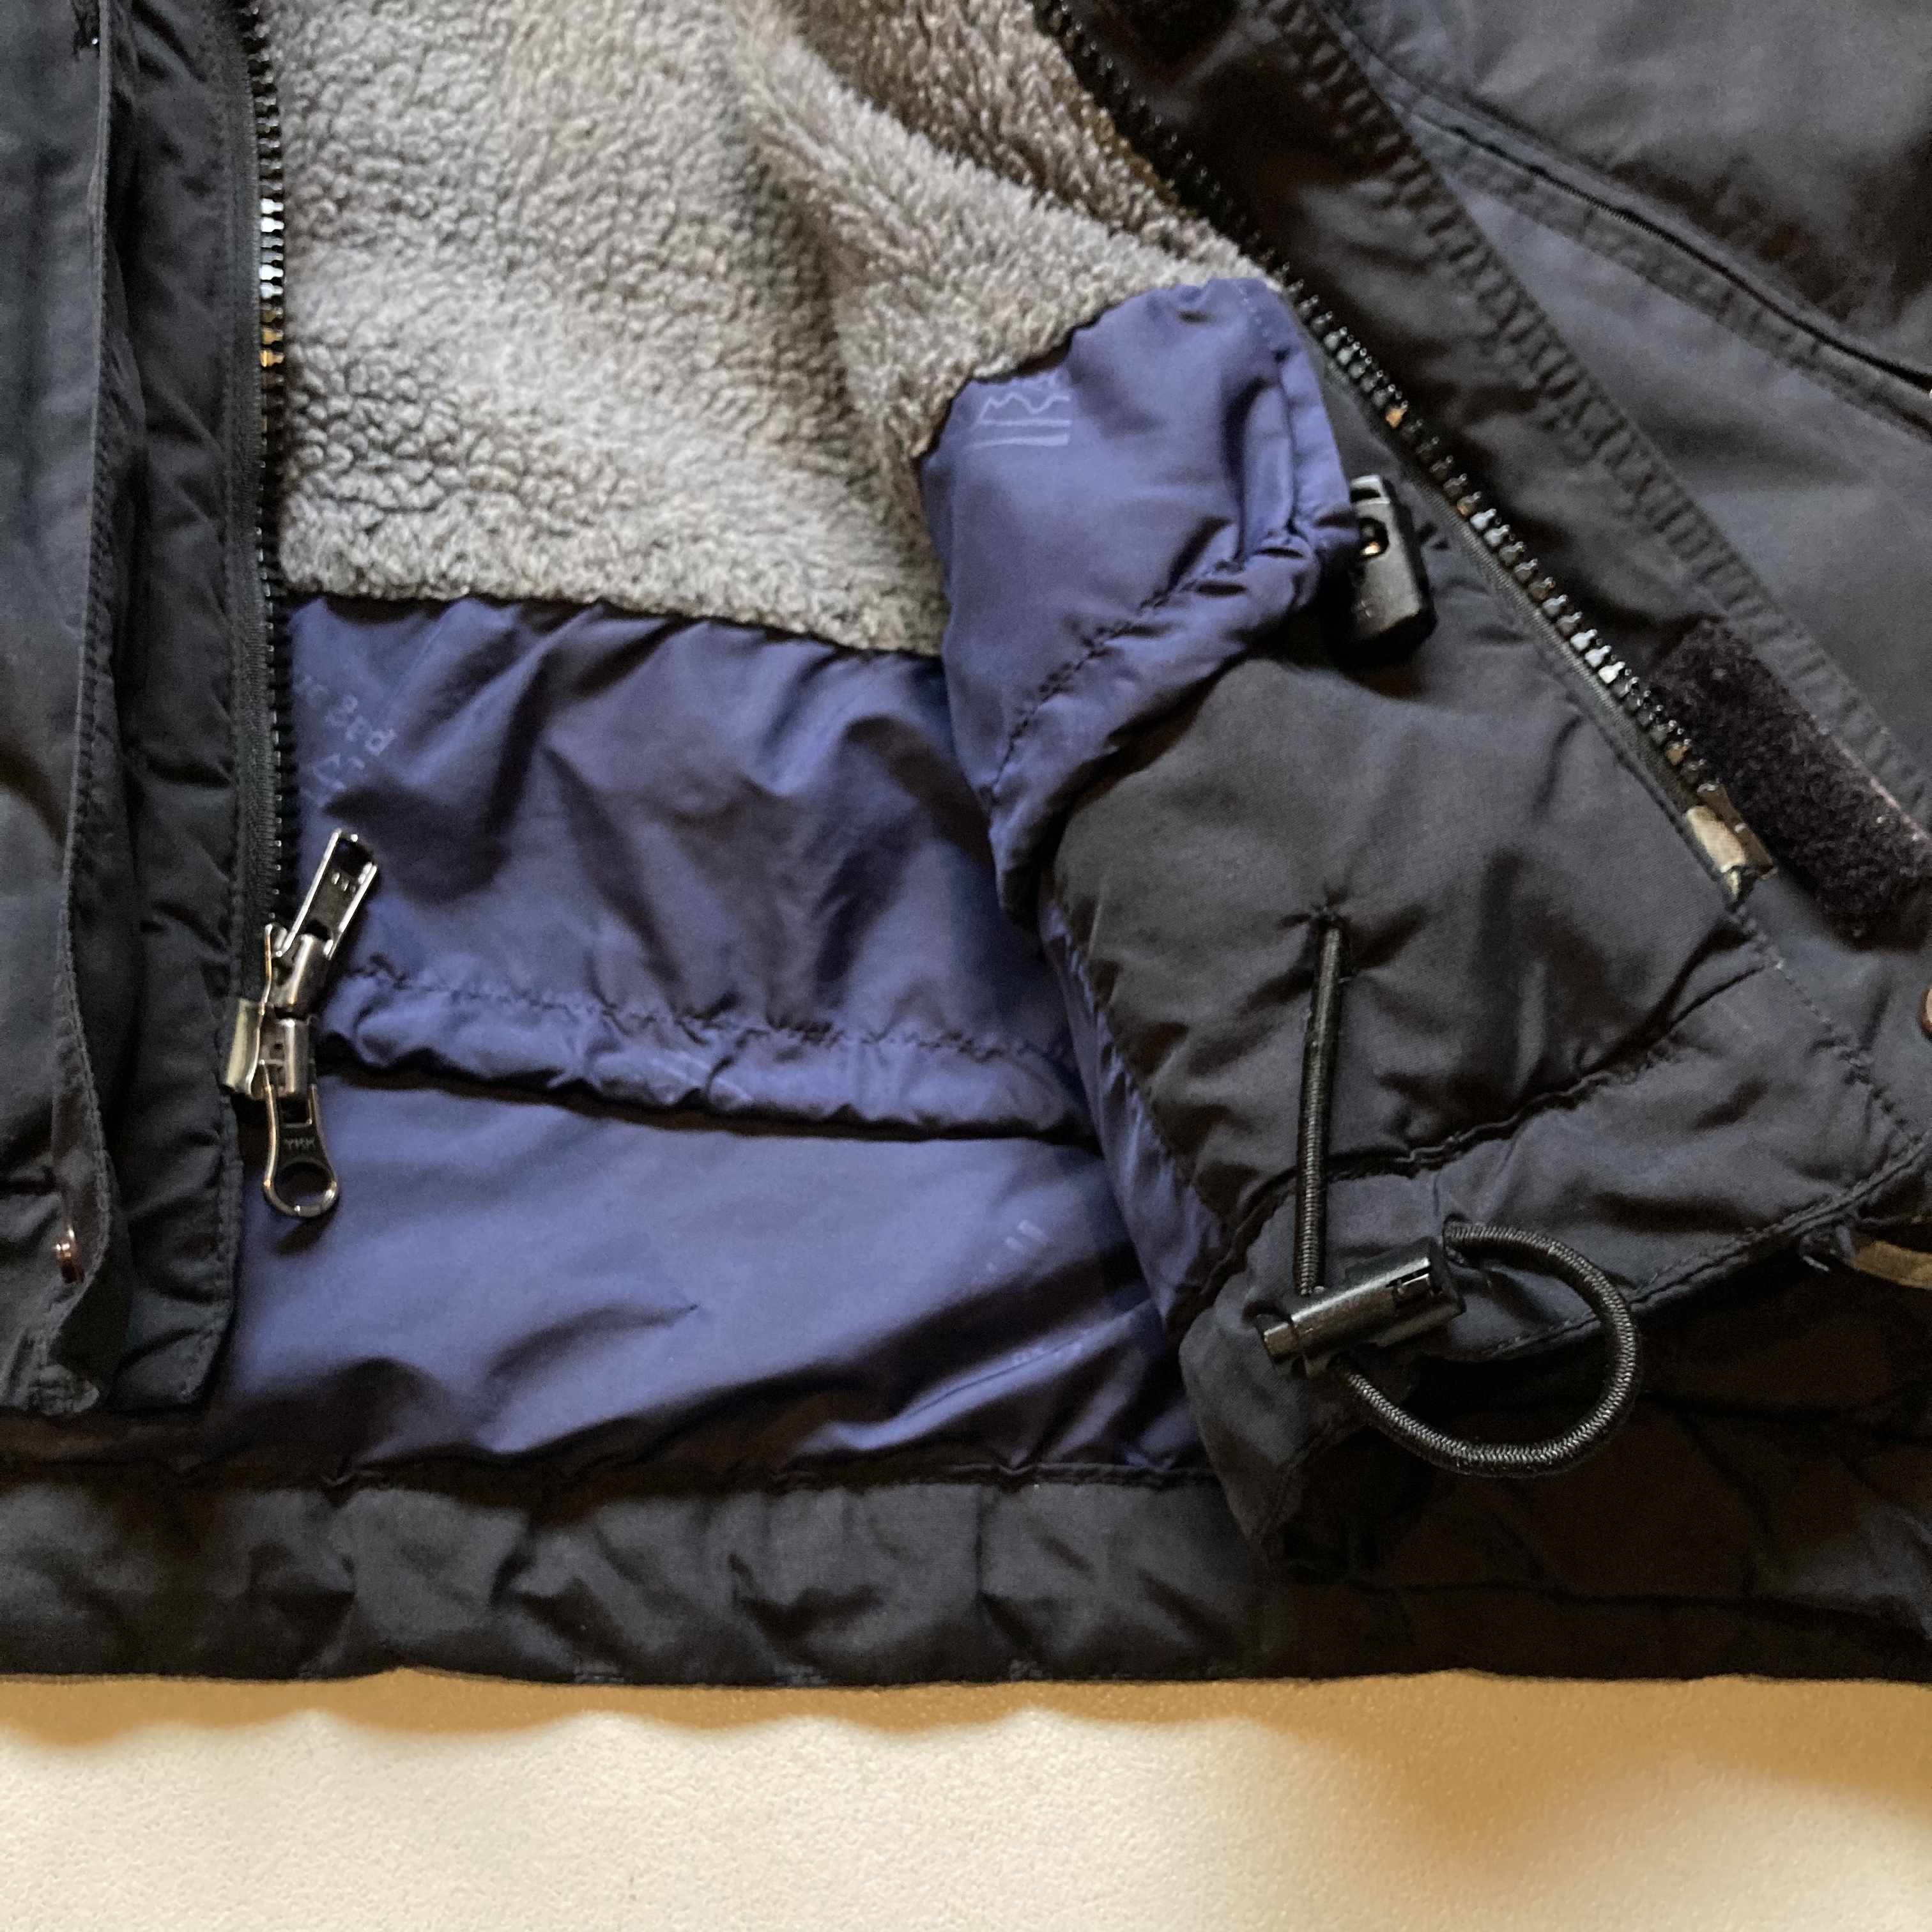 01s Patagonia fusion jacket “size L” 2000年代 01年製 パタゴニア